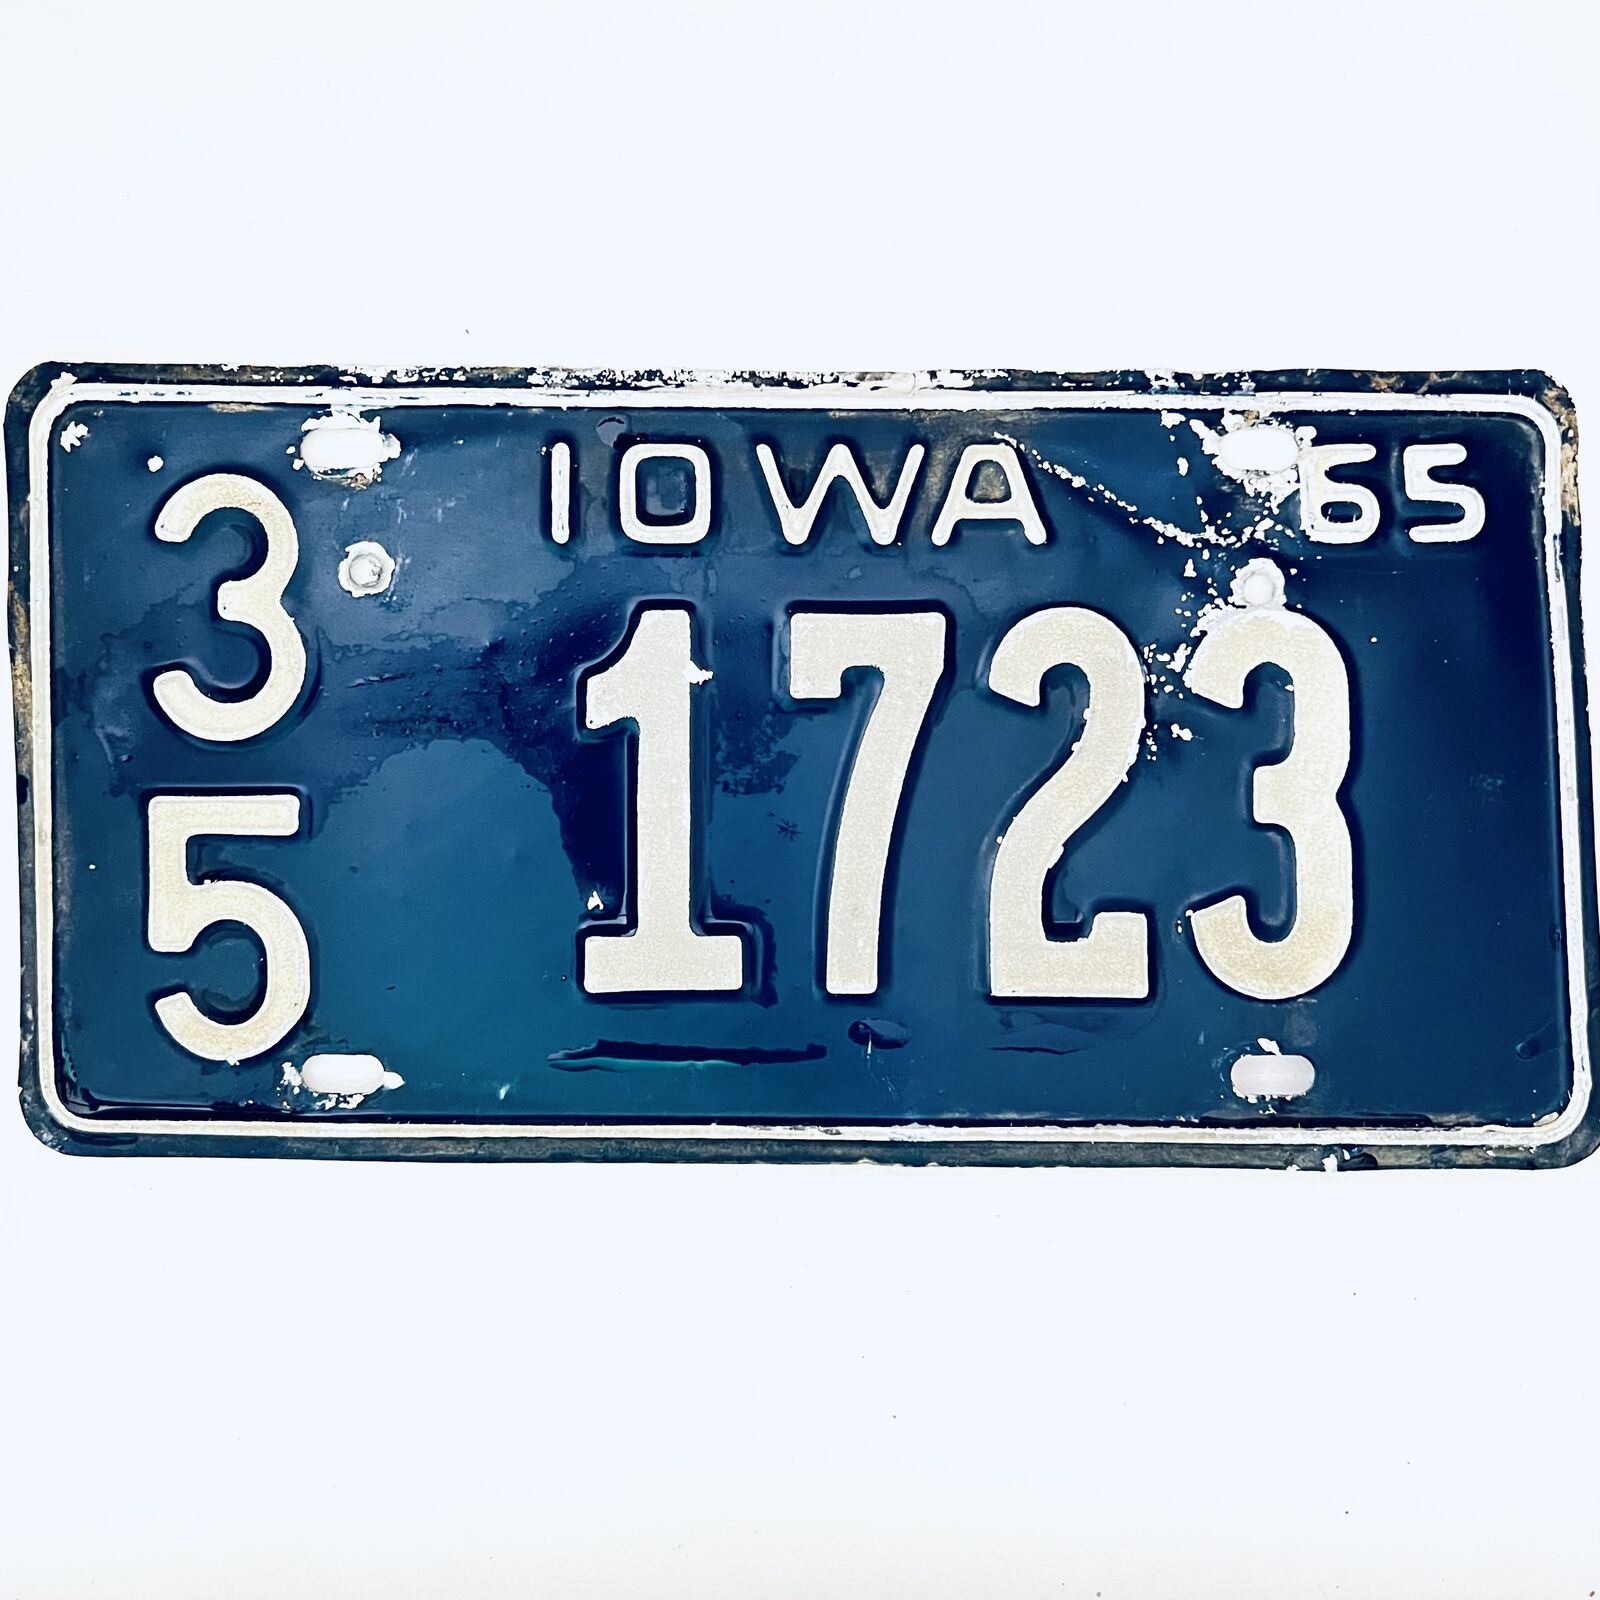 1965 United States Iowa Franklin County Passenger License Plate 35 1723